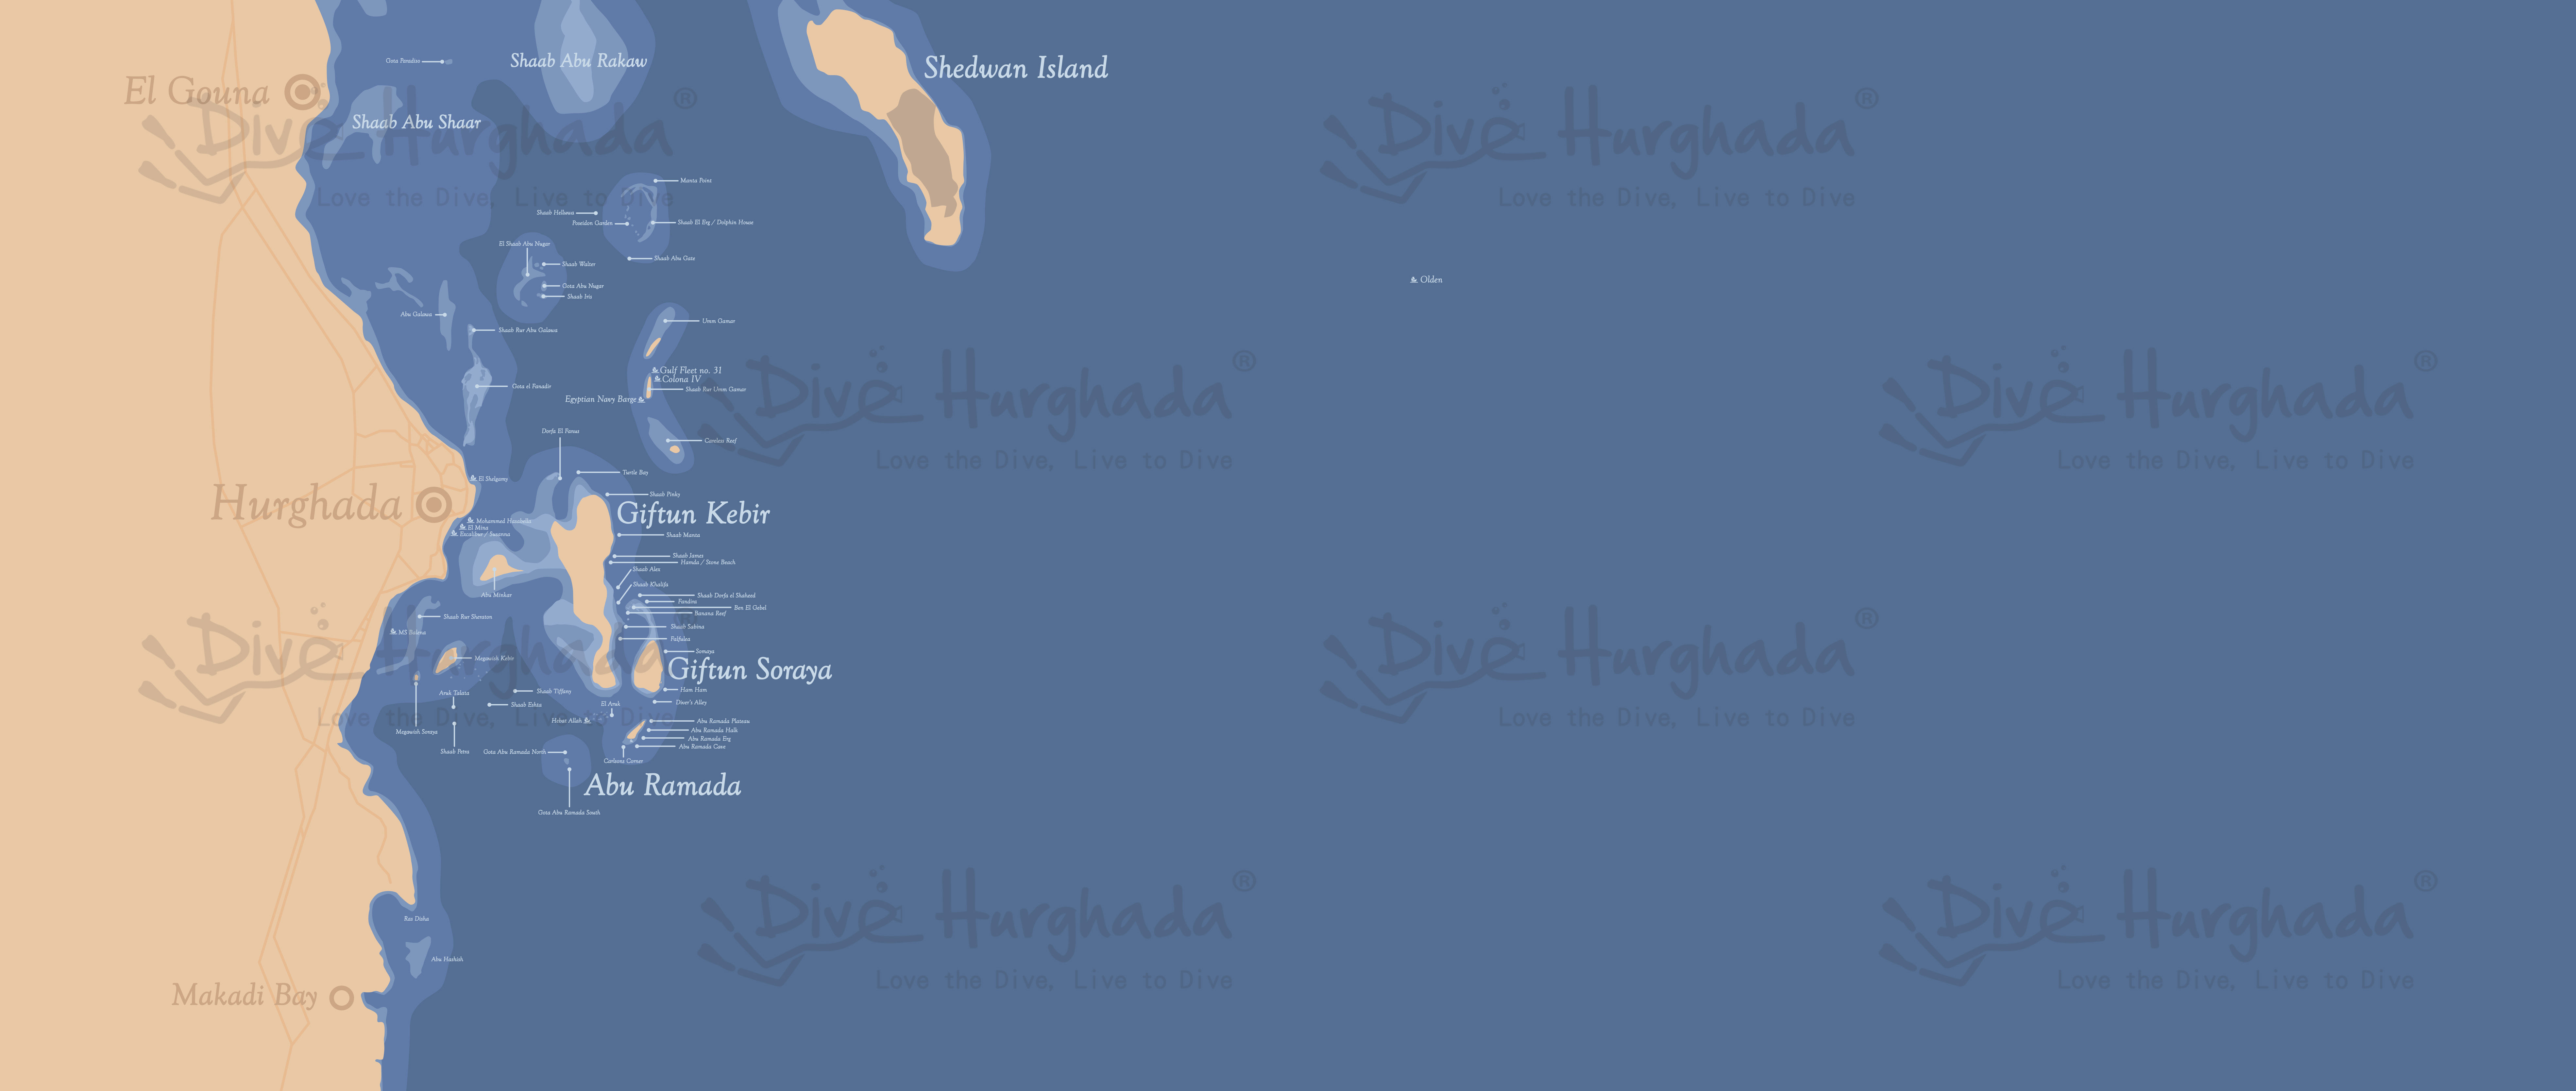 Hurghada Divesites and wrecks